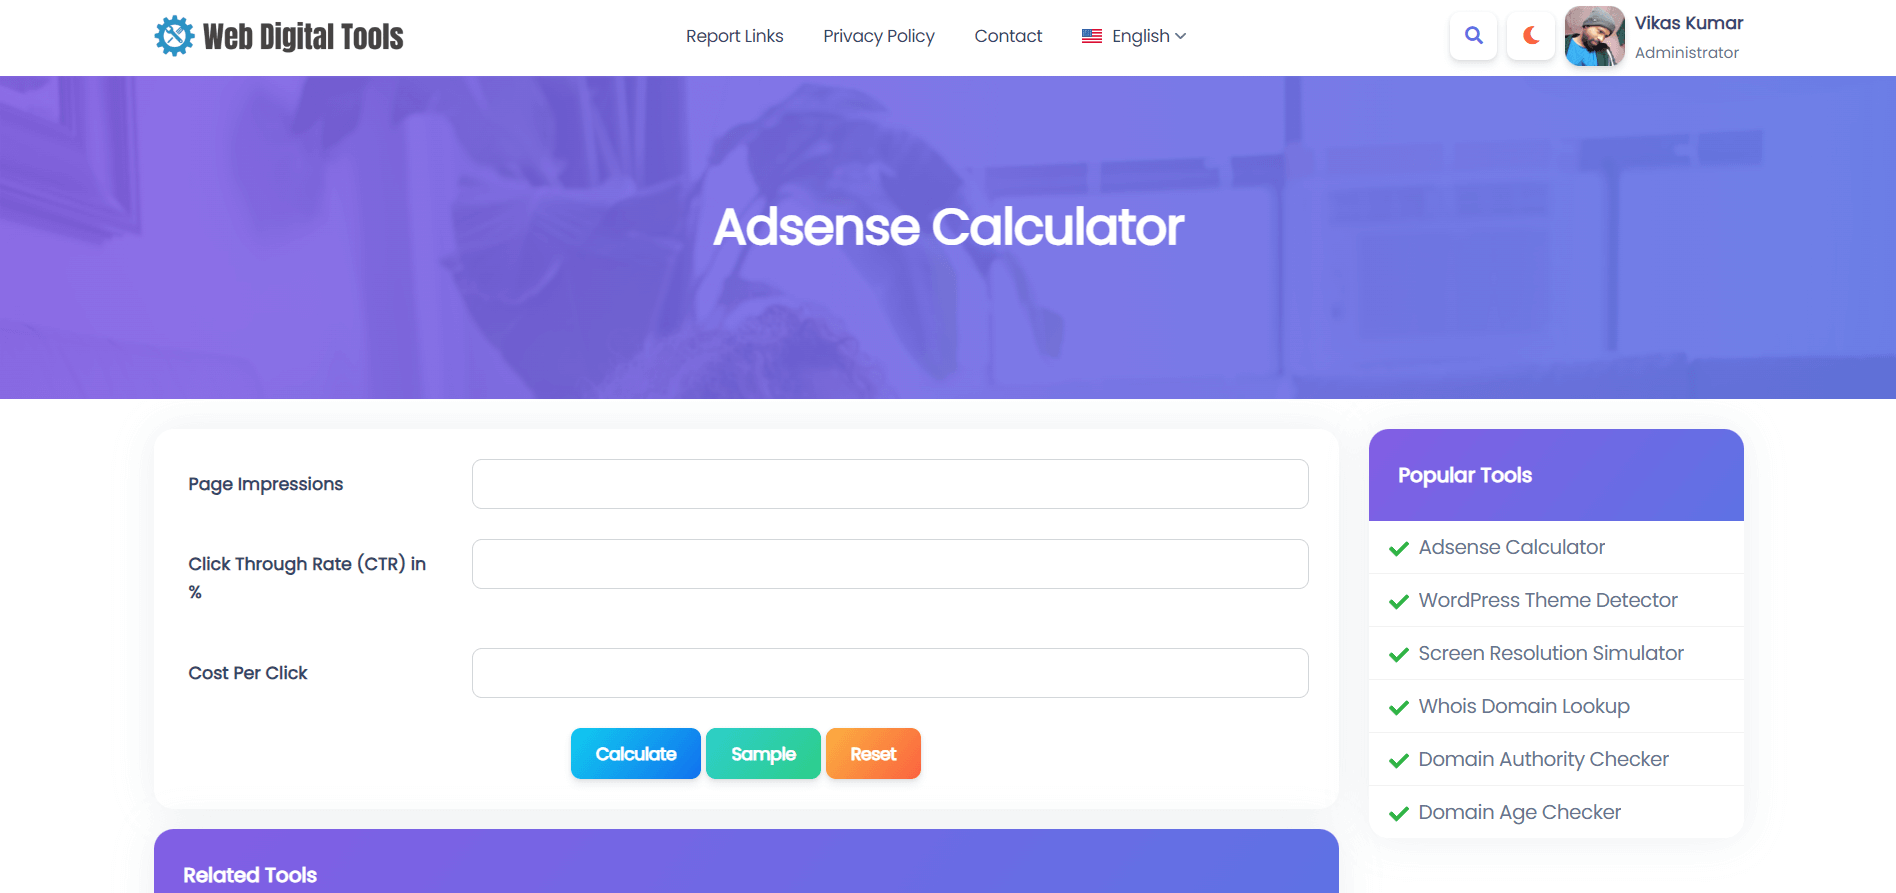 Adsense Calculator